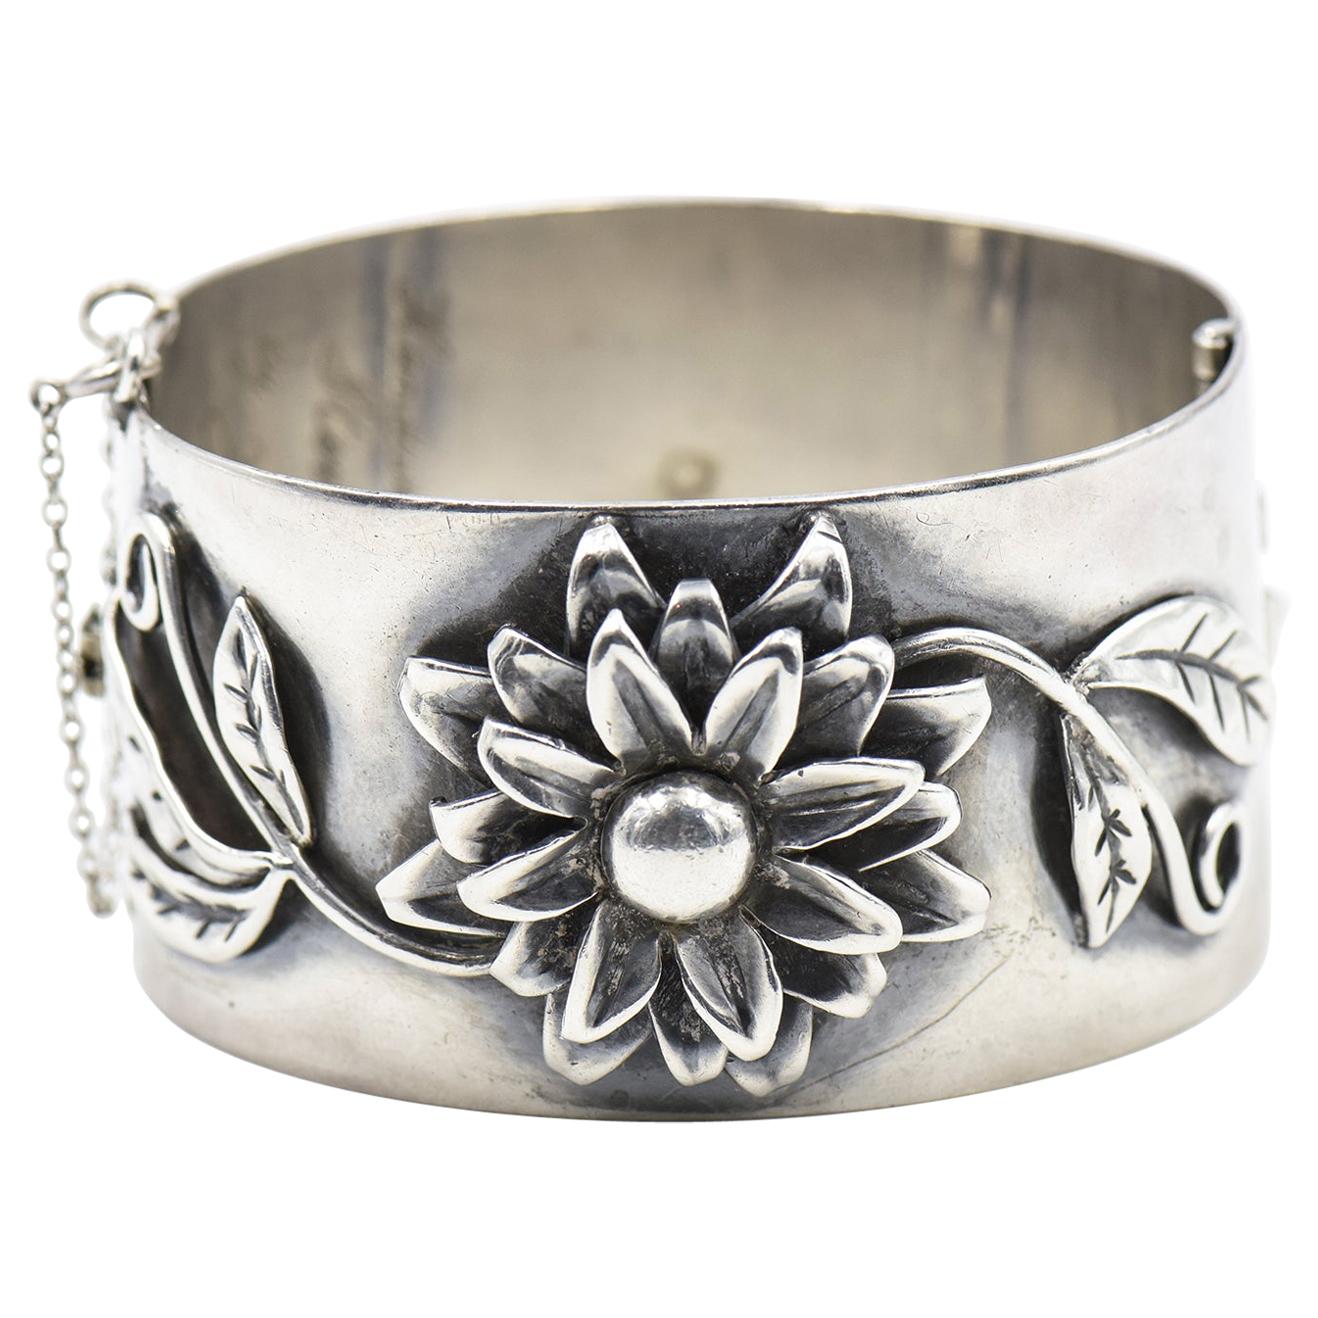 Applied Flower Floral Sterling Silver Bangle Bracelet by Heidi